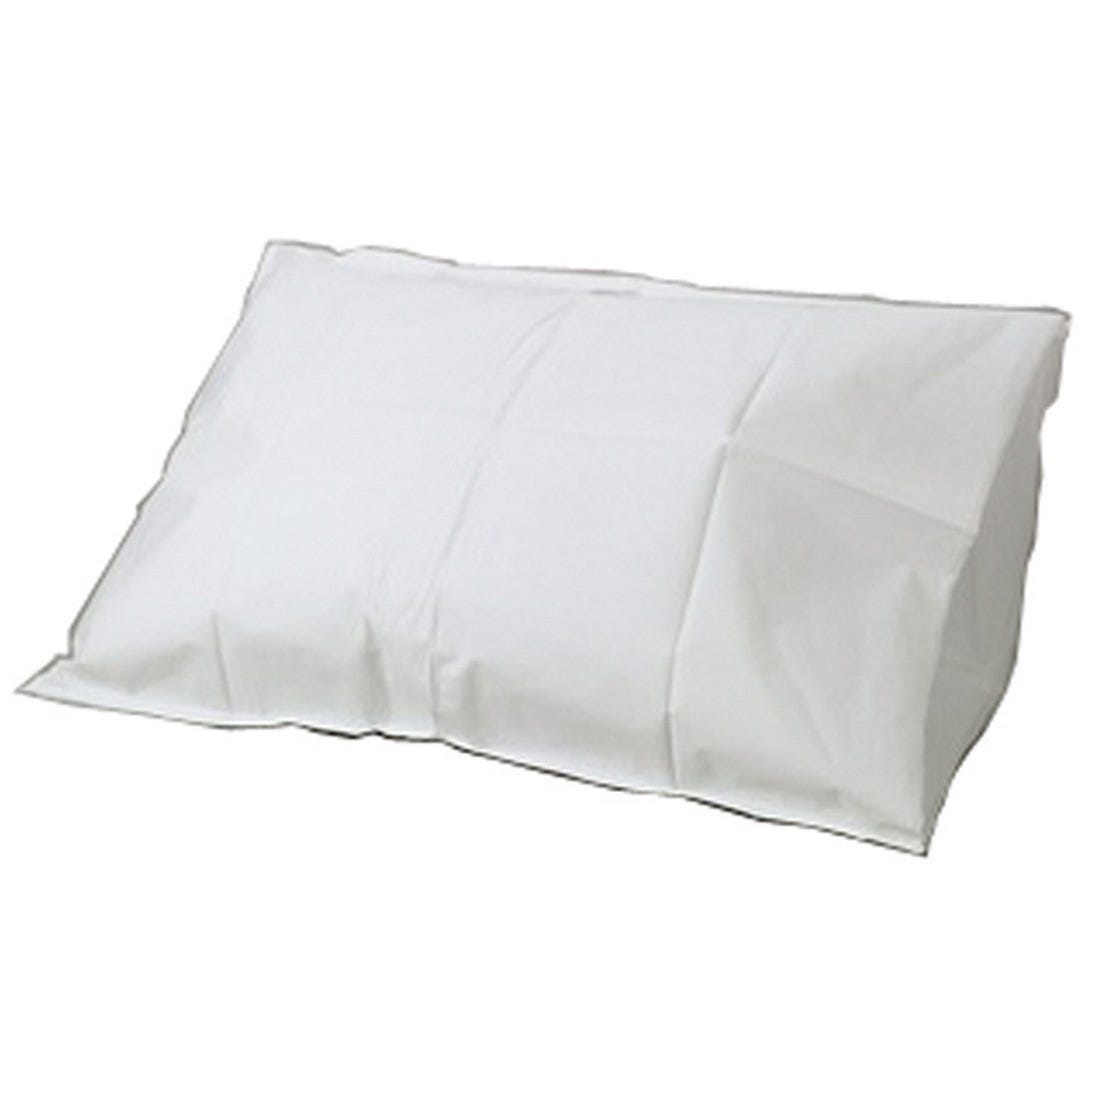 Pillowcases, white, non woven